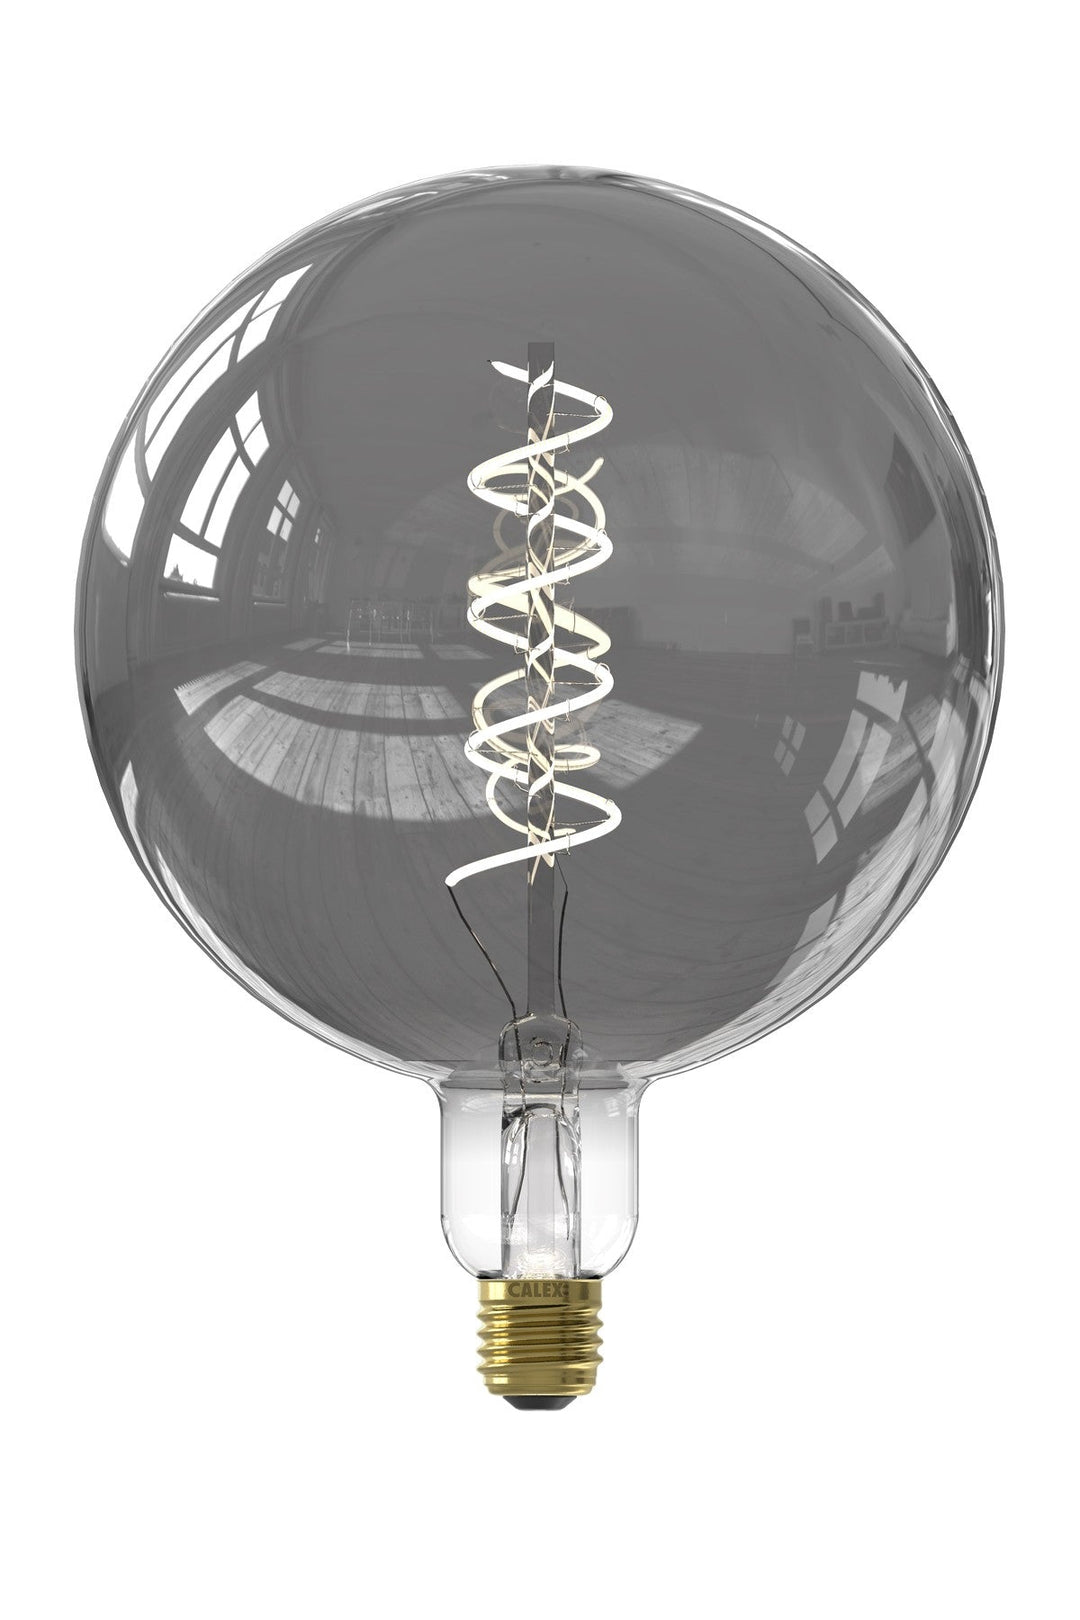 Calex 429164 | LED Titanium Globe Bulb | E27 | G200 | 5W | Smart Bulb